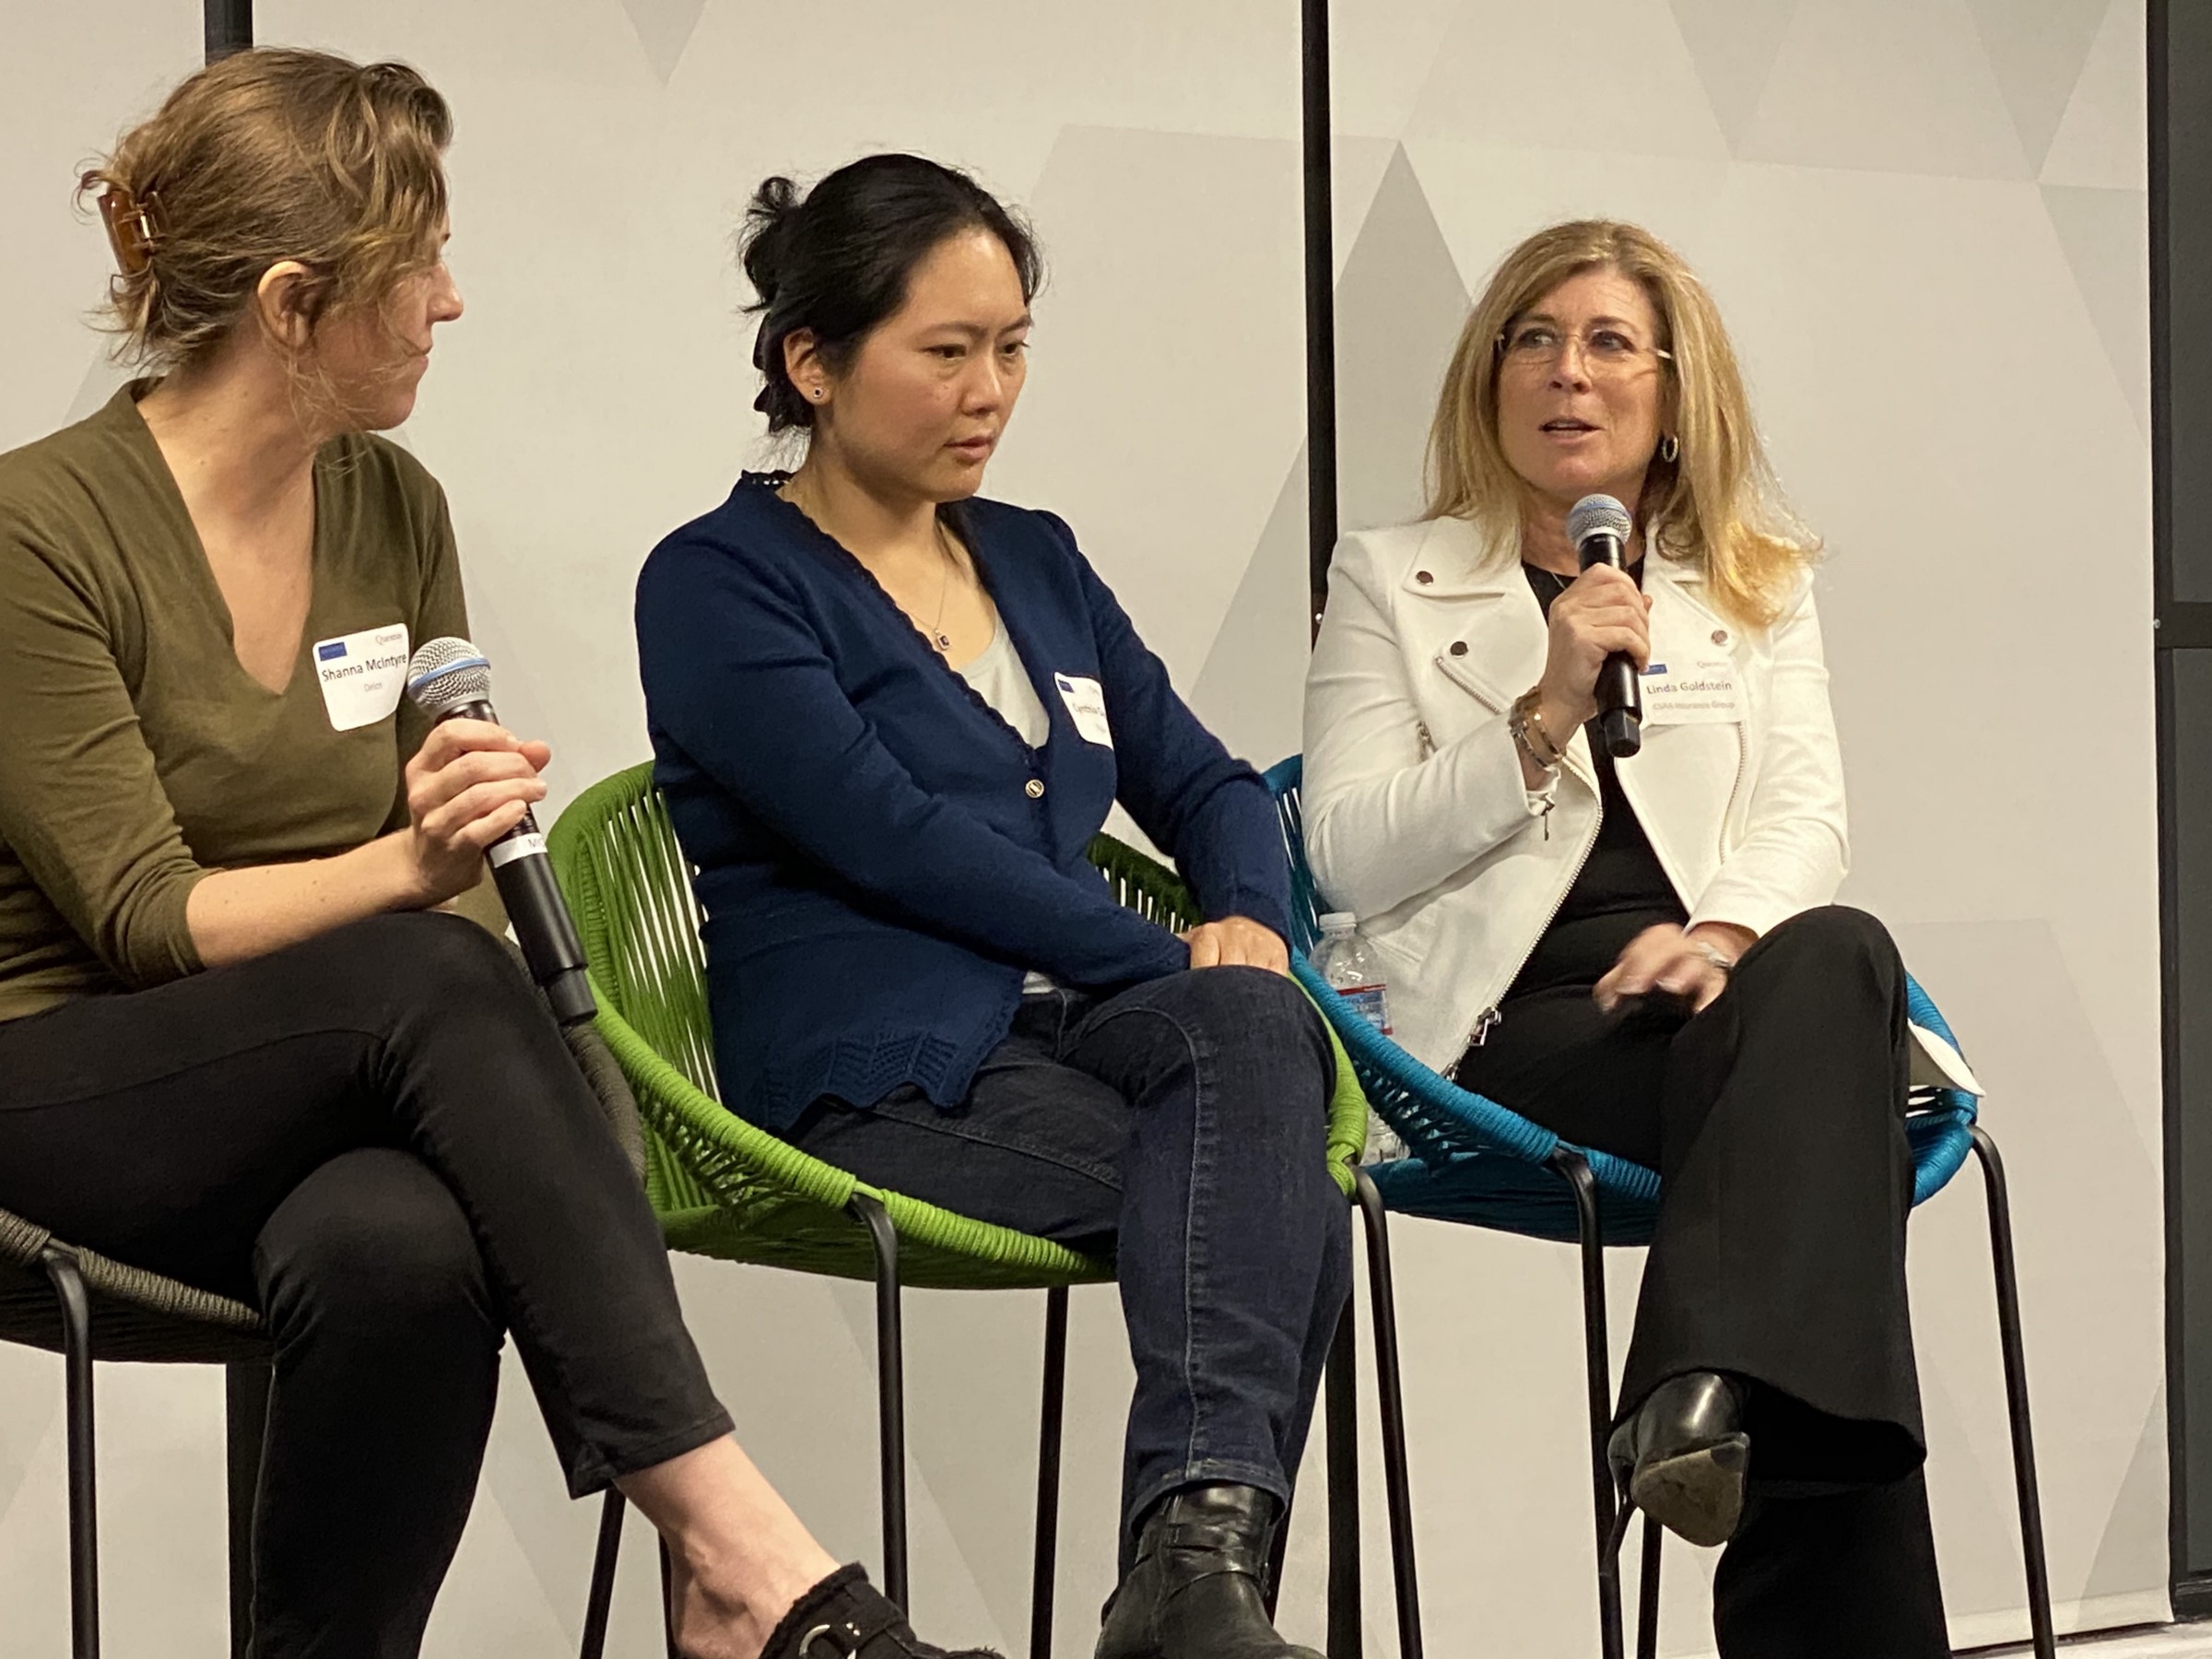 Panelists — Shanna McIntyre, Cynthia Chen, and Linda Goldstein